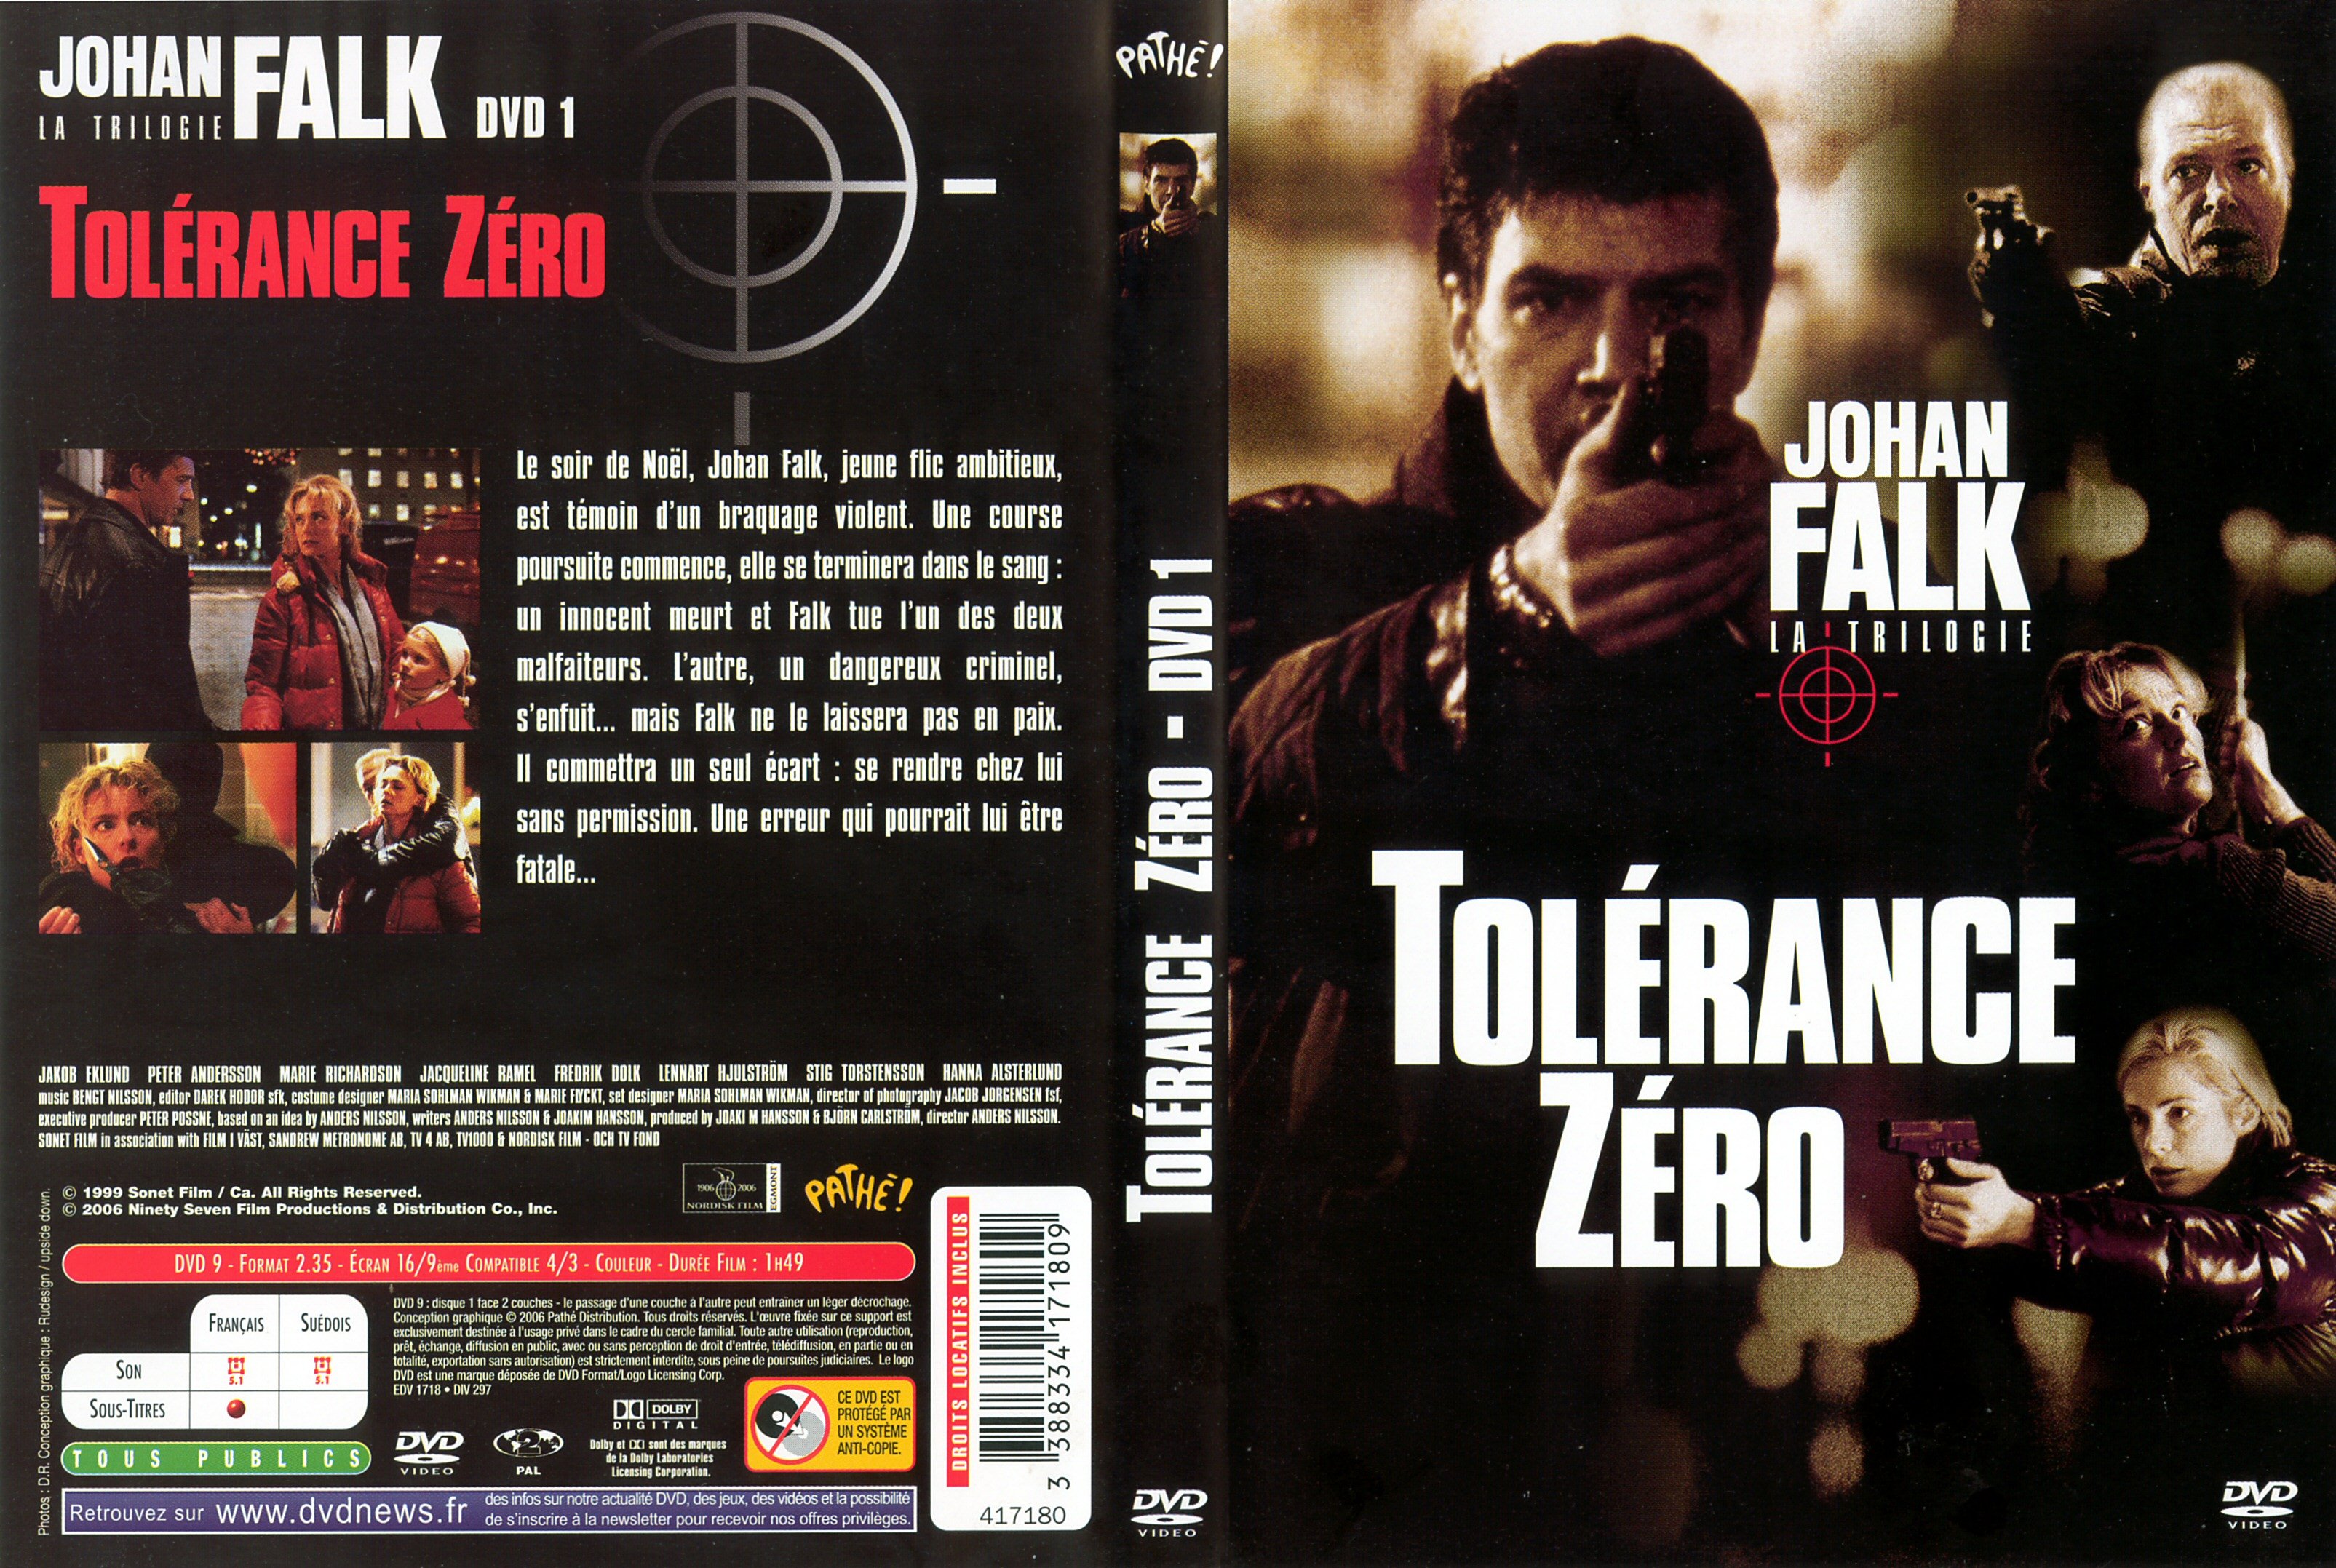 Jaquette DVD Tolerance Zero (Johan Falk)